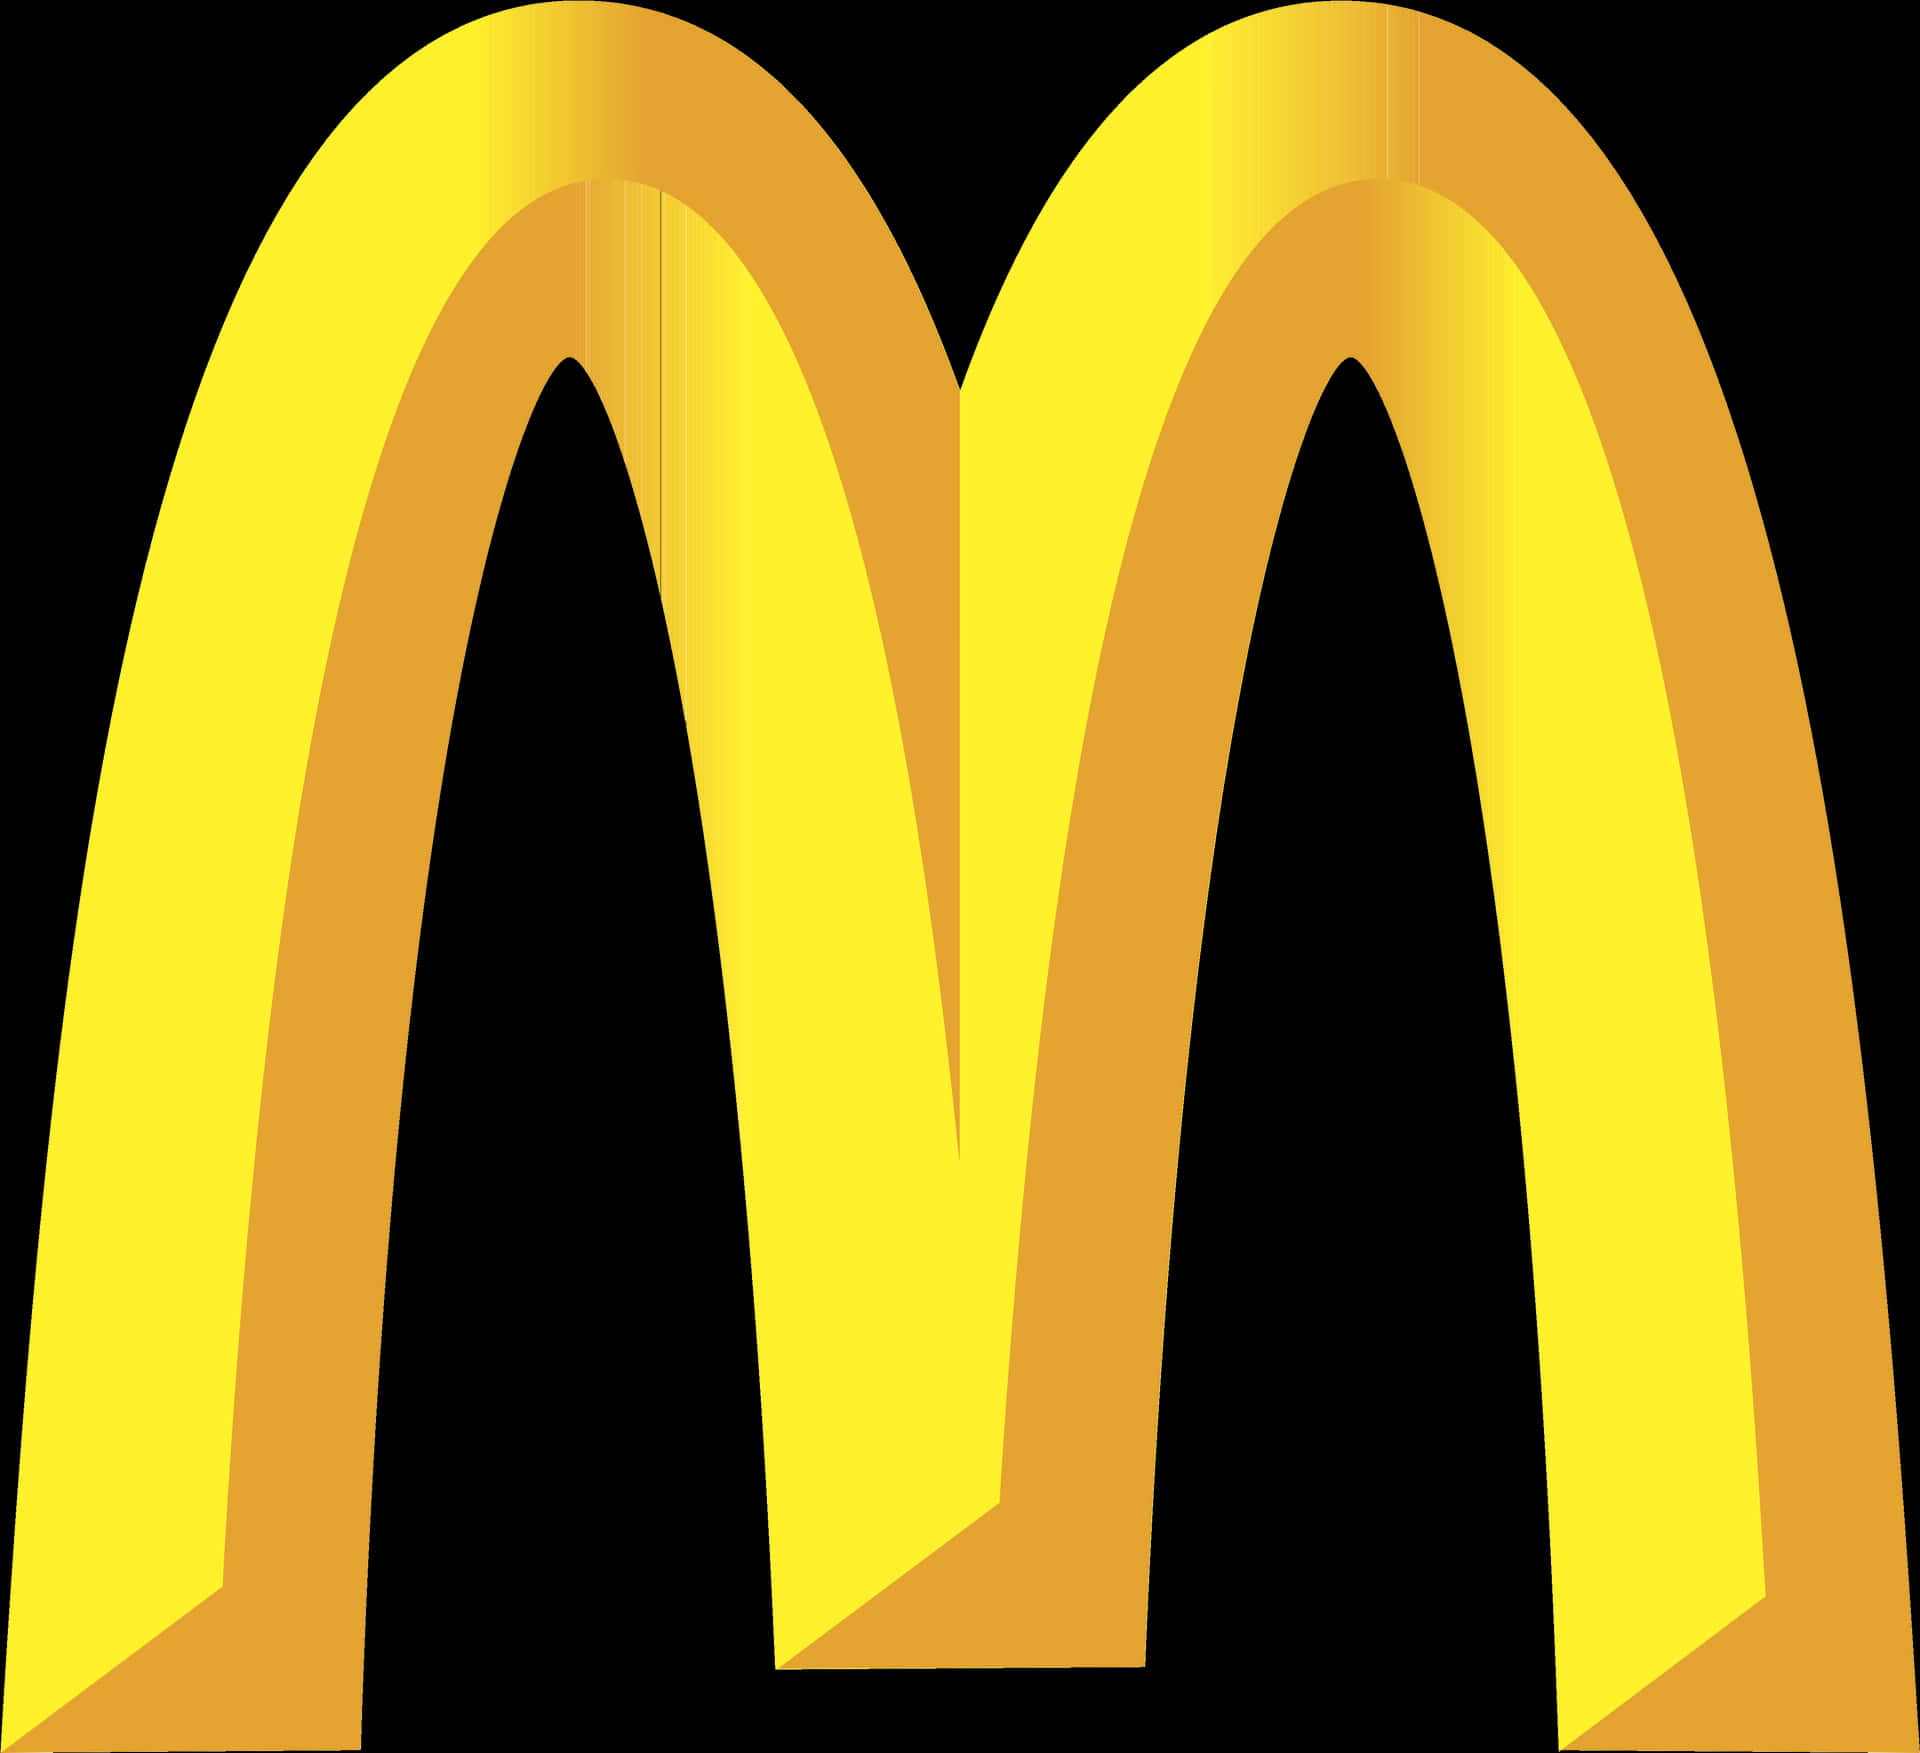 Mc Donalds Golden Arches Logo PNG image